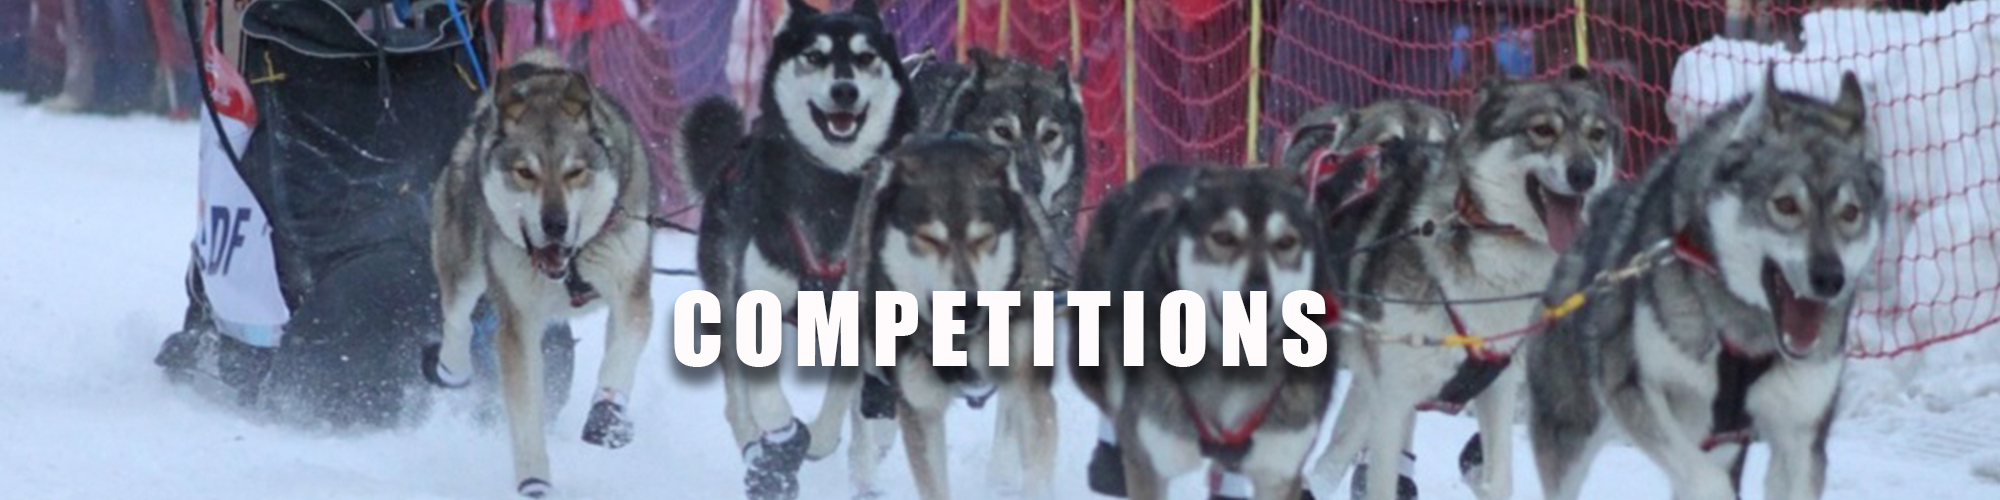 Competitions chiens de traîneau et canirando neuchâtel - huskiesport